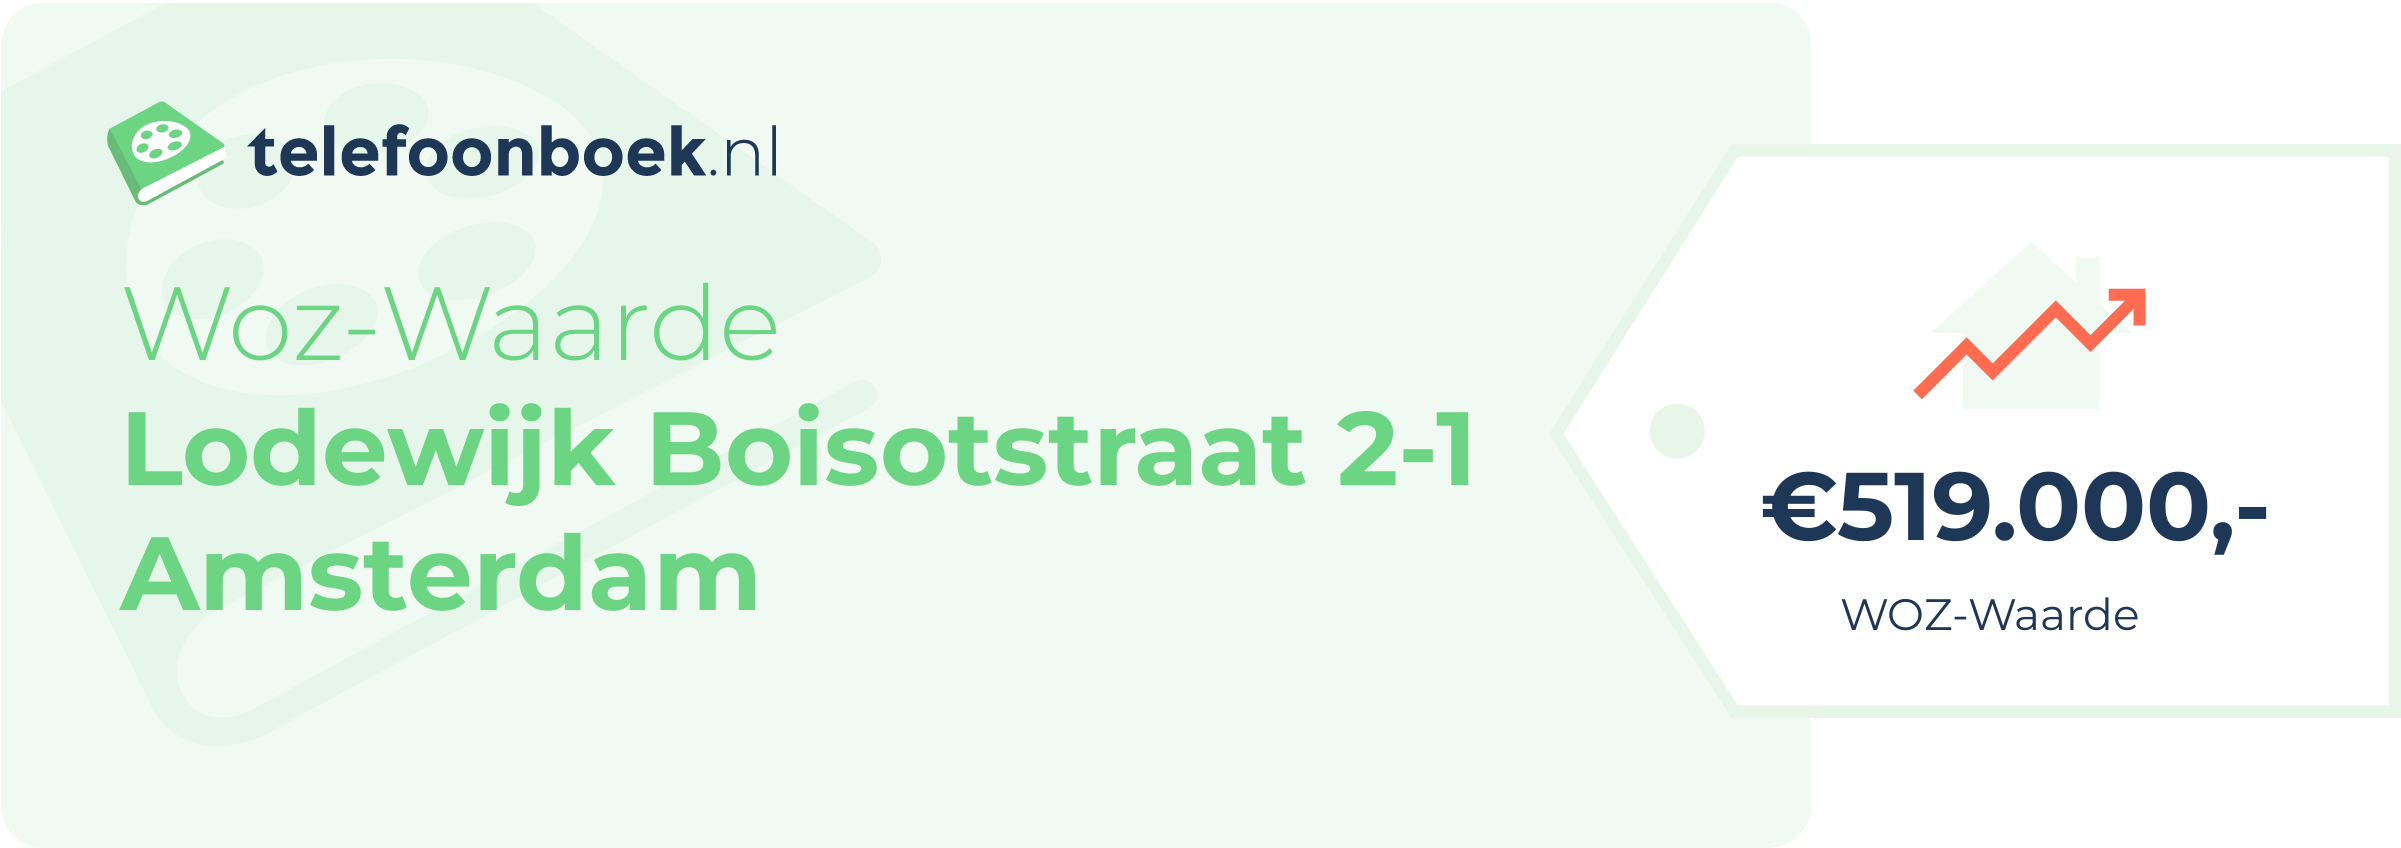 WOZ-waarde Lodewijk Boisotstraat 2-1 Amsterdam